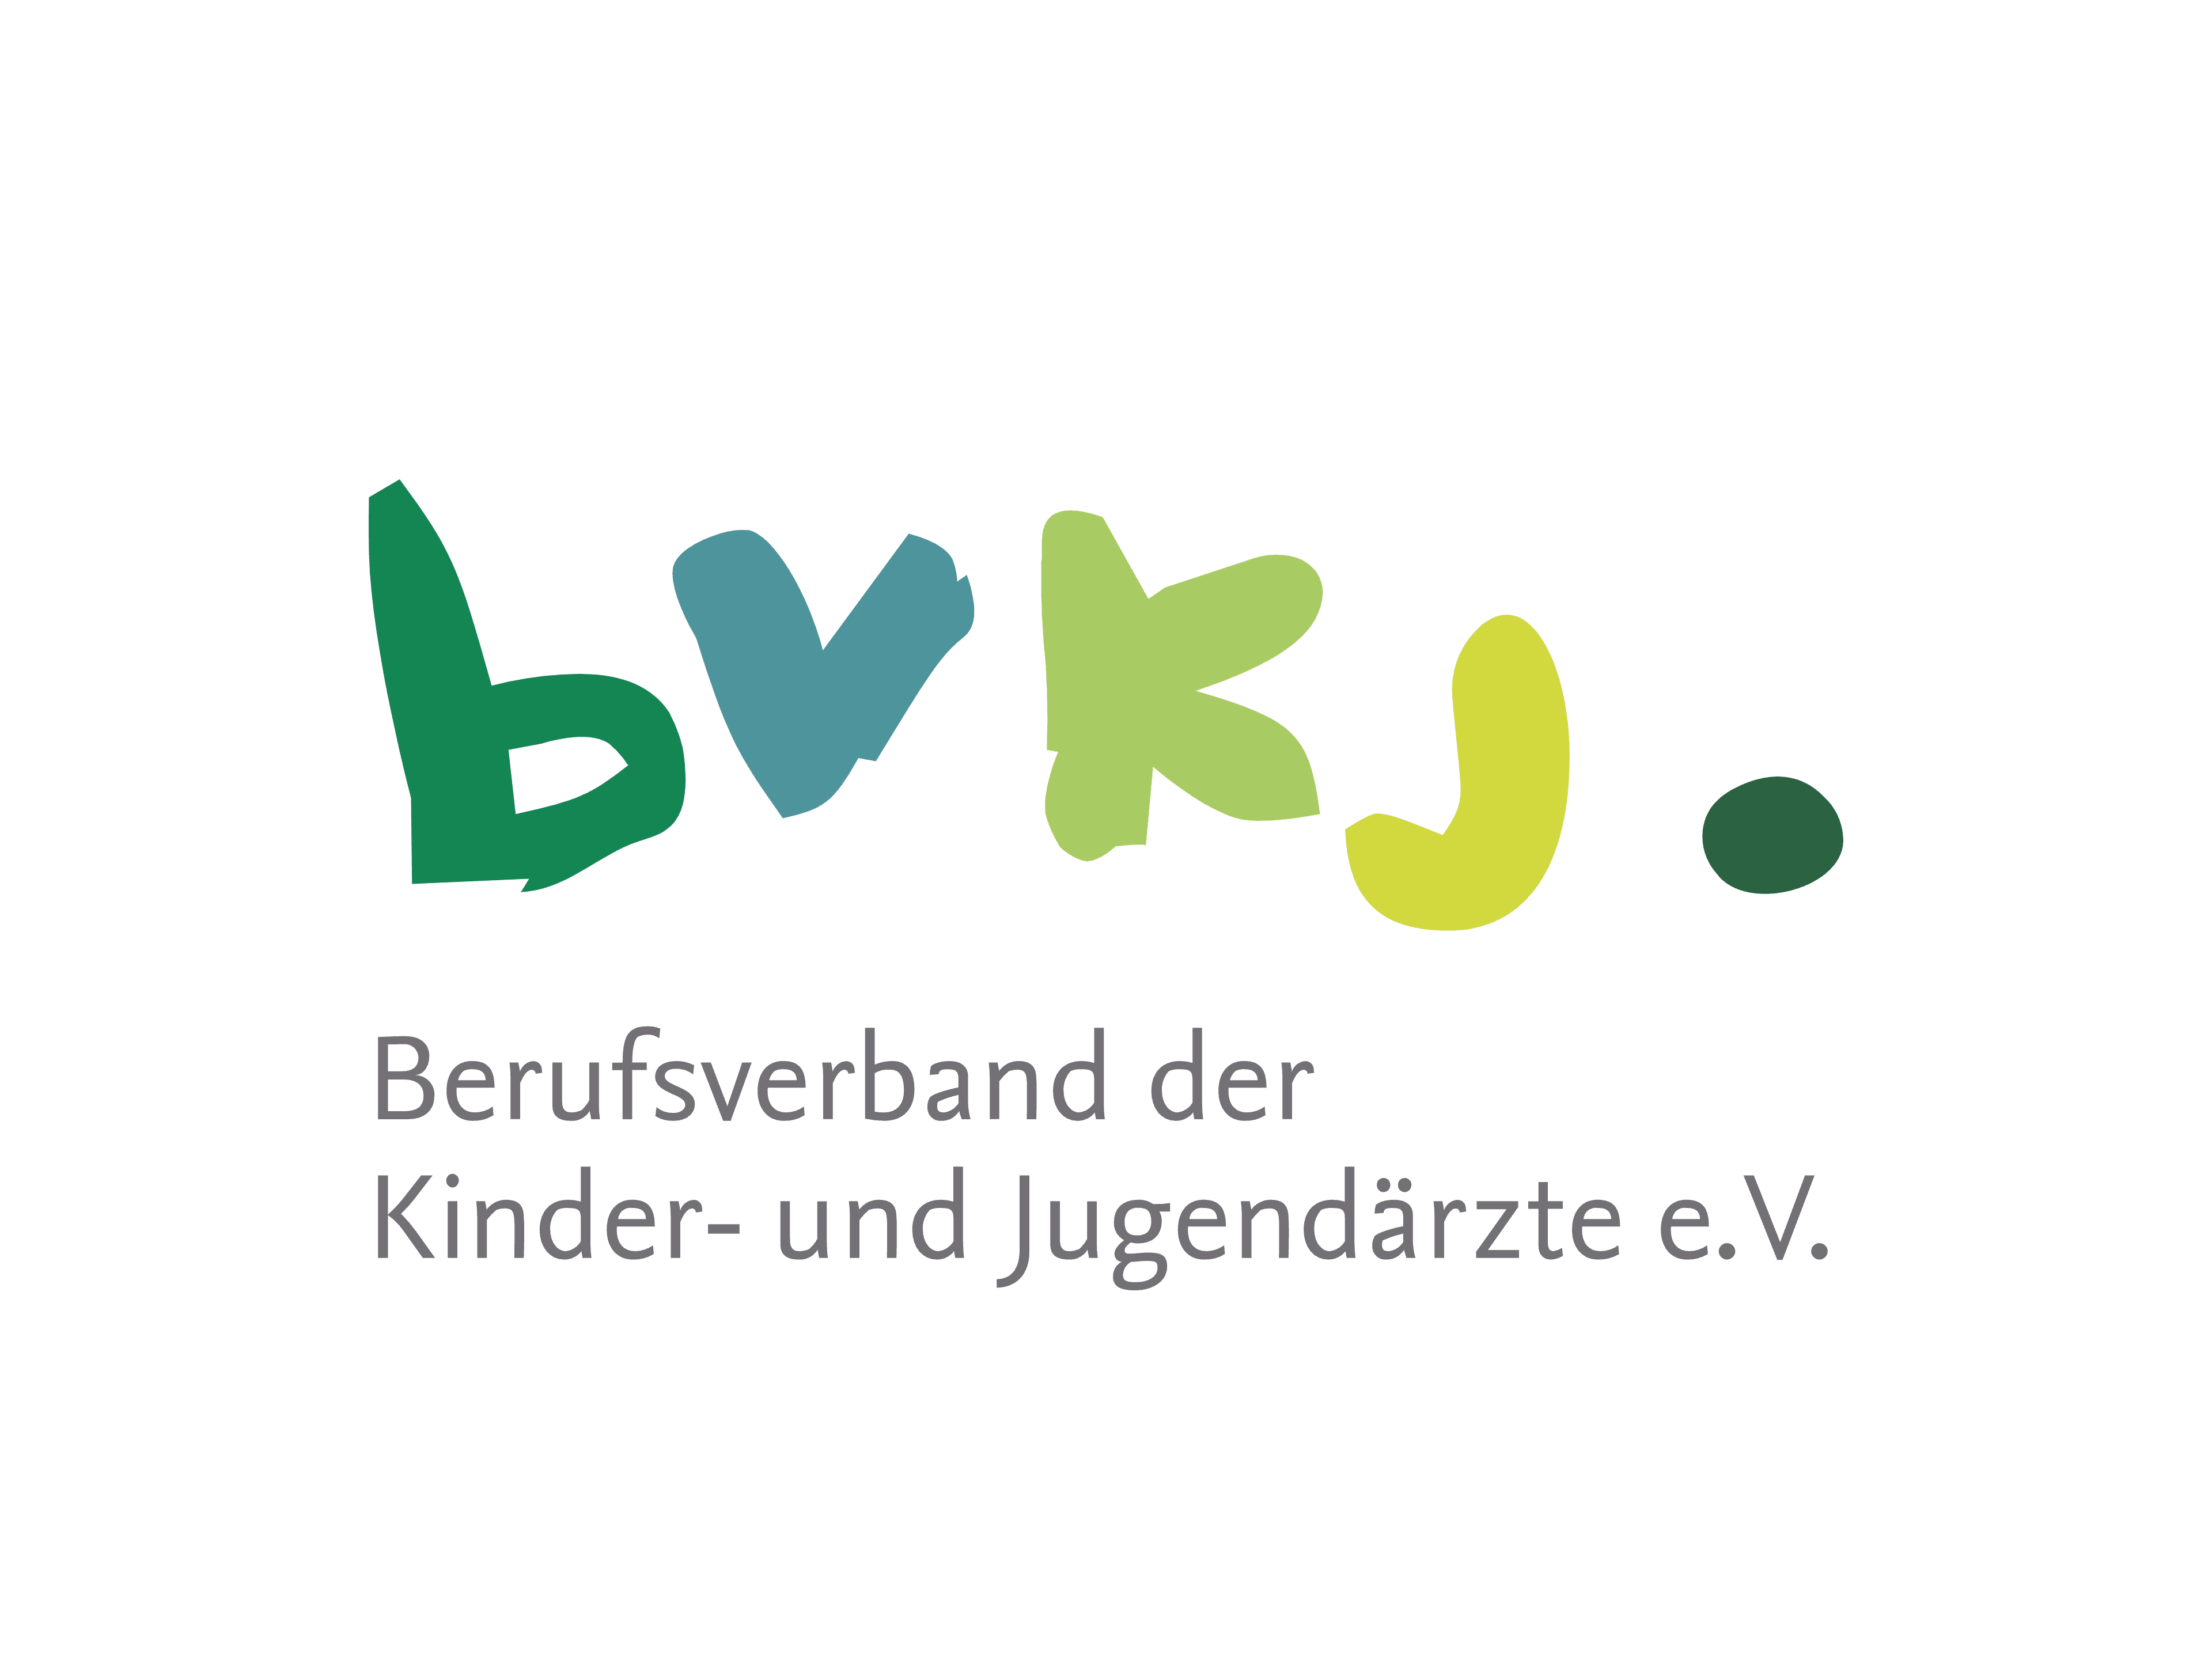 Berufsverband der Kinder- und Jugendärzte e.V. logo